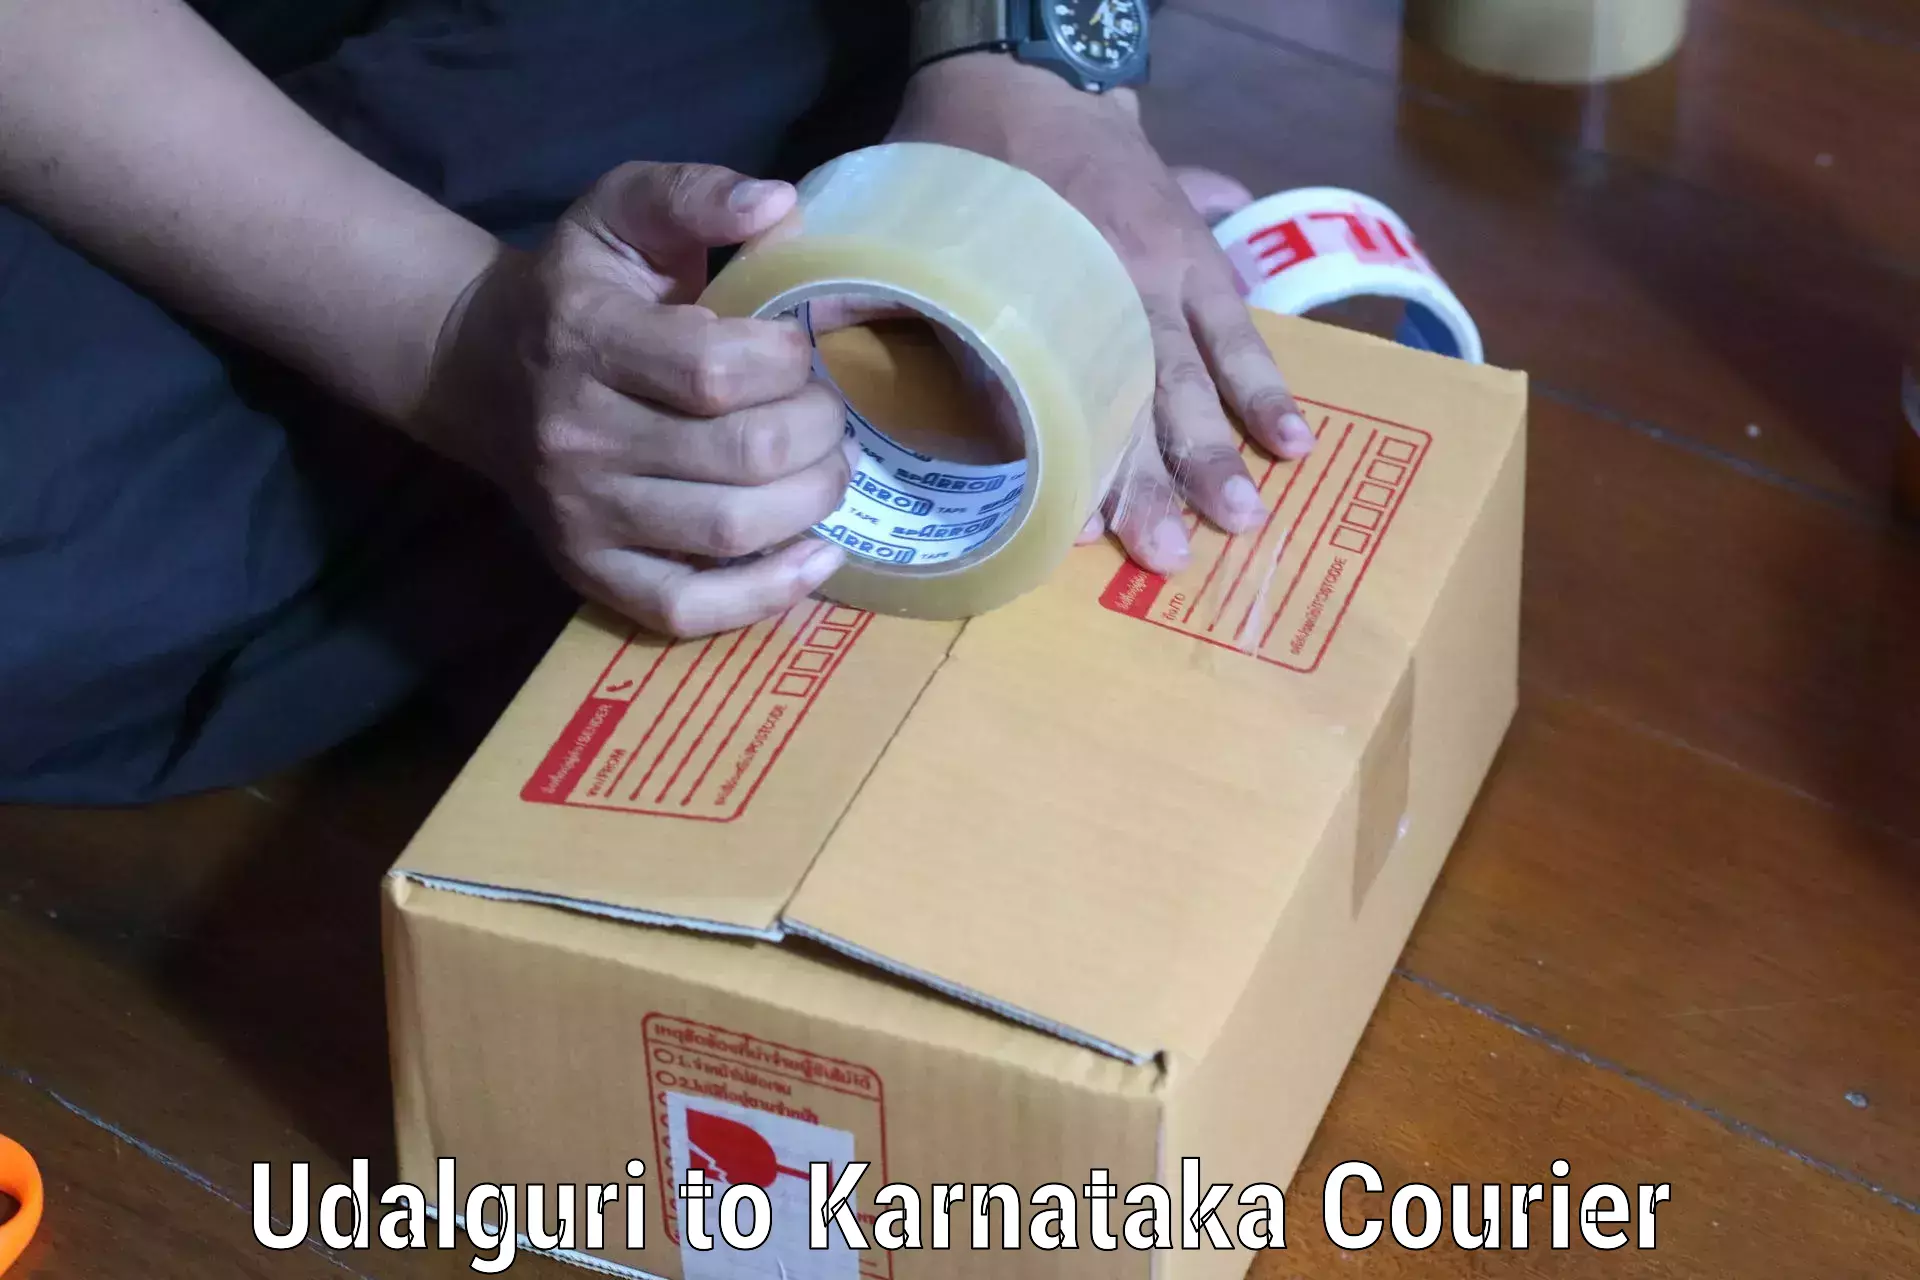 Professional courier handling Udalguri to Nanjangud